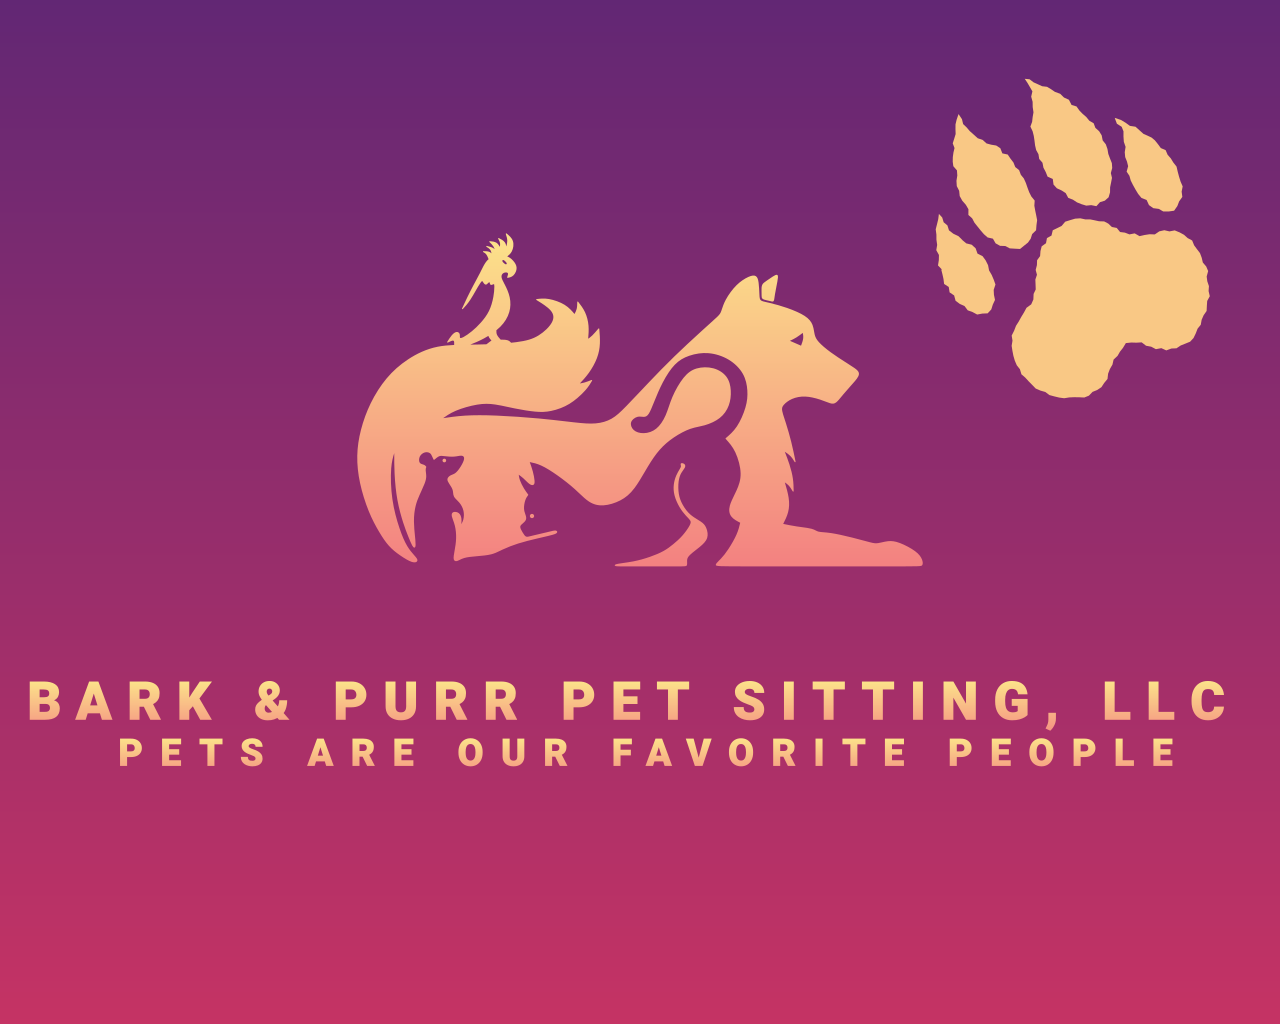 Bark & Purr Pet Sitting, LLC